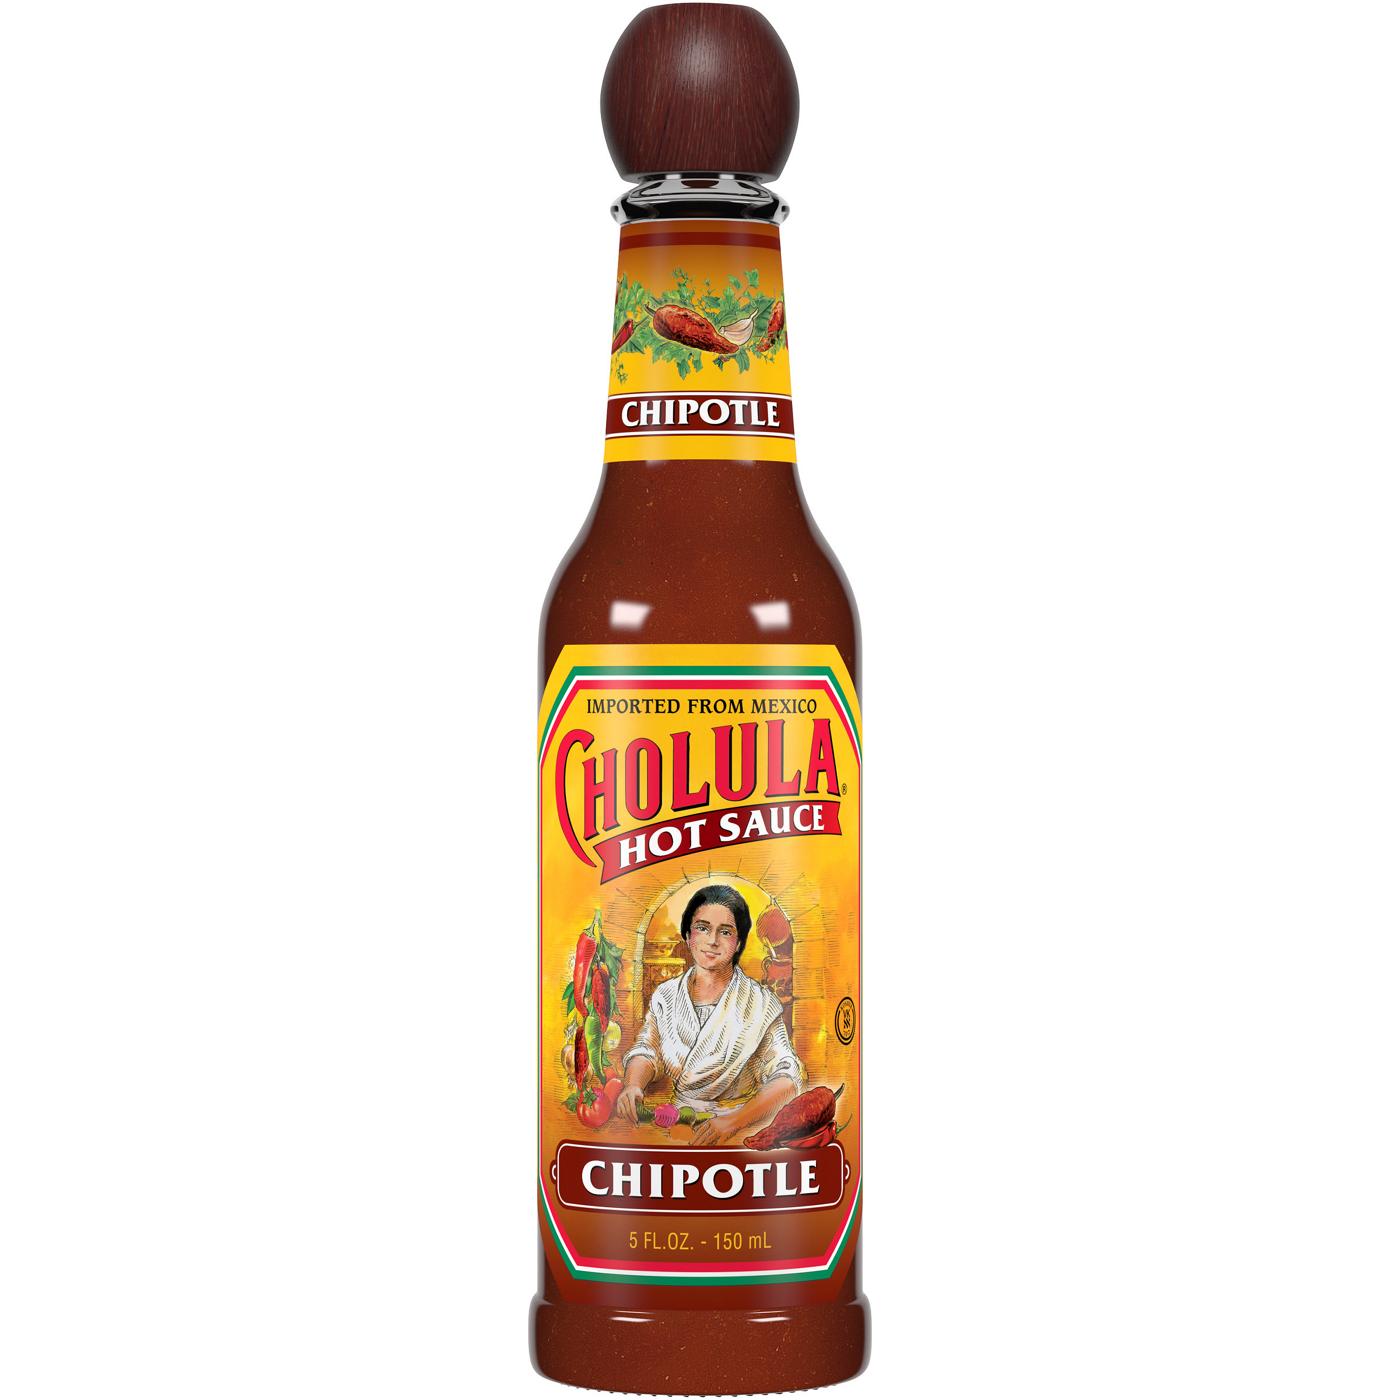 Cholula Chipotle Hot Sauce; image 1 of 8